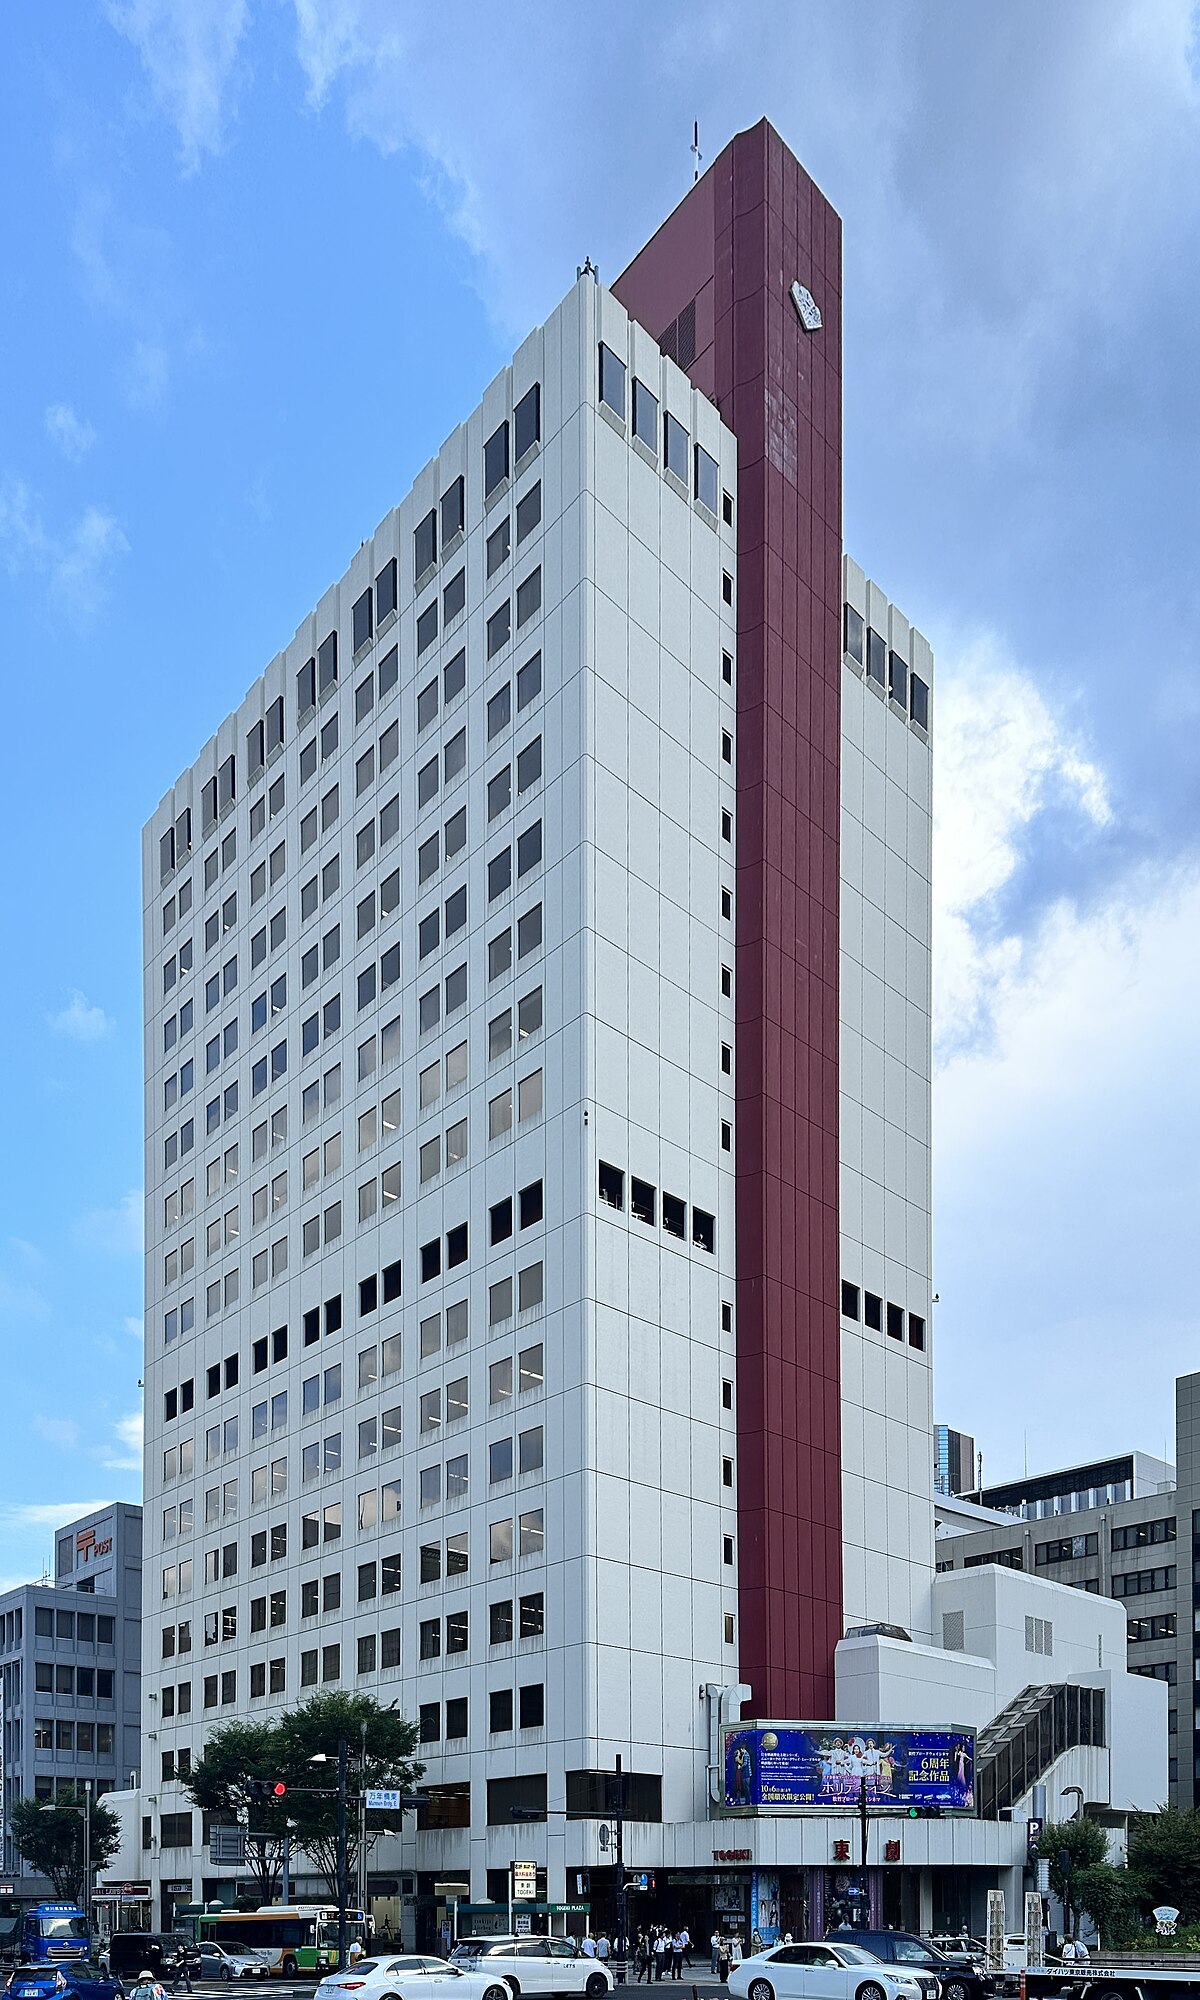 松竹 - Wikipedia